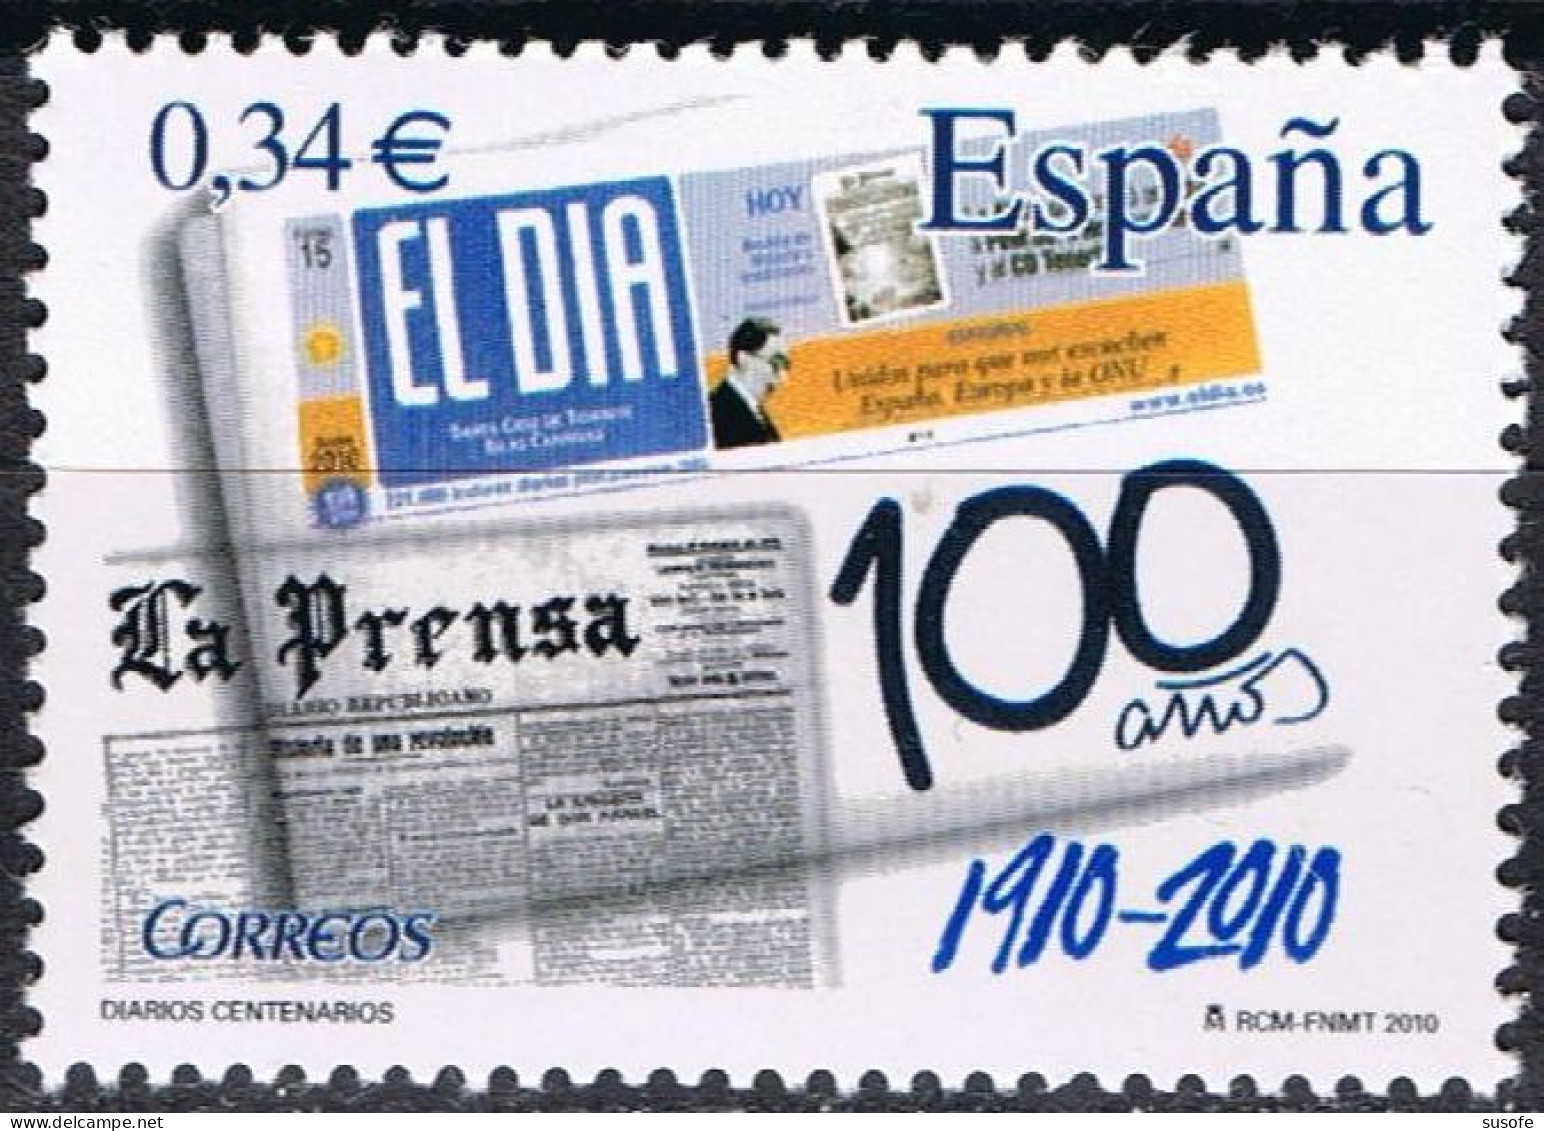 España 2010 Edifil 4604 Sello ** Diarios Centenarios El Dia (1910-2010) Tenerife Michel 4551 Yvert 4256 Spain Stamp - Neufs